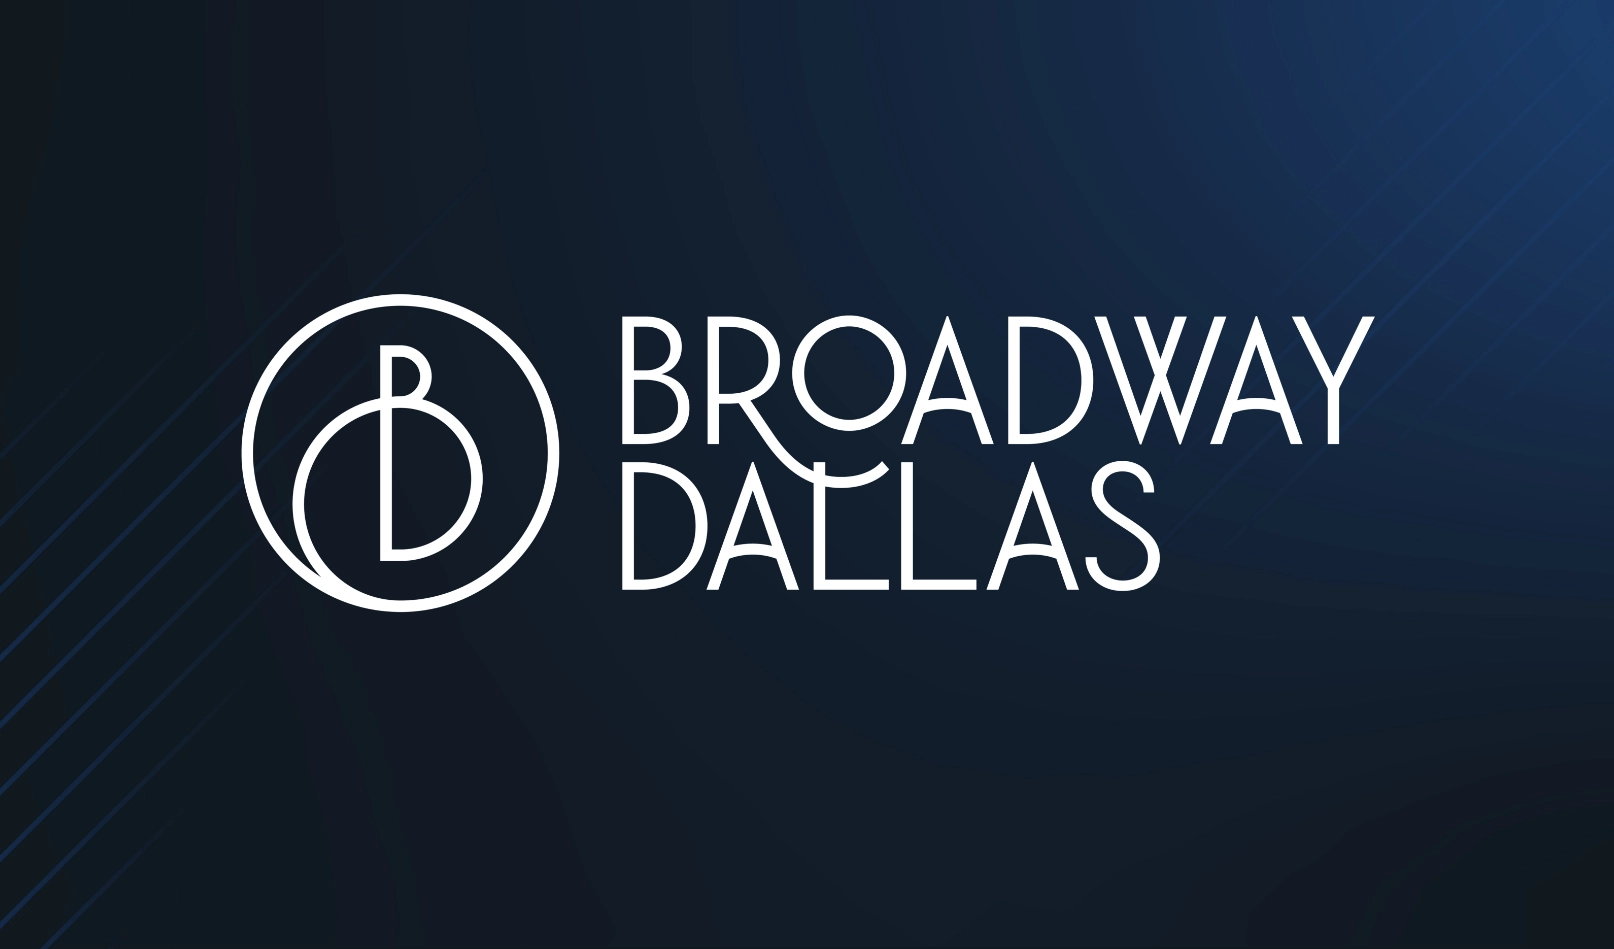 Broadway Dallas presents To Kill a Mockingbird | tickets on sale now